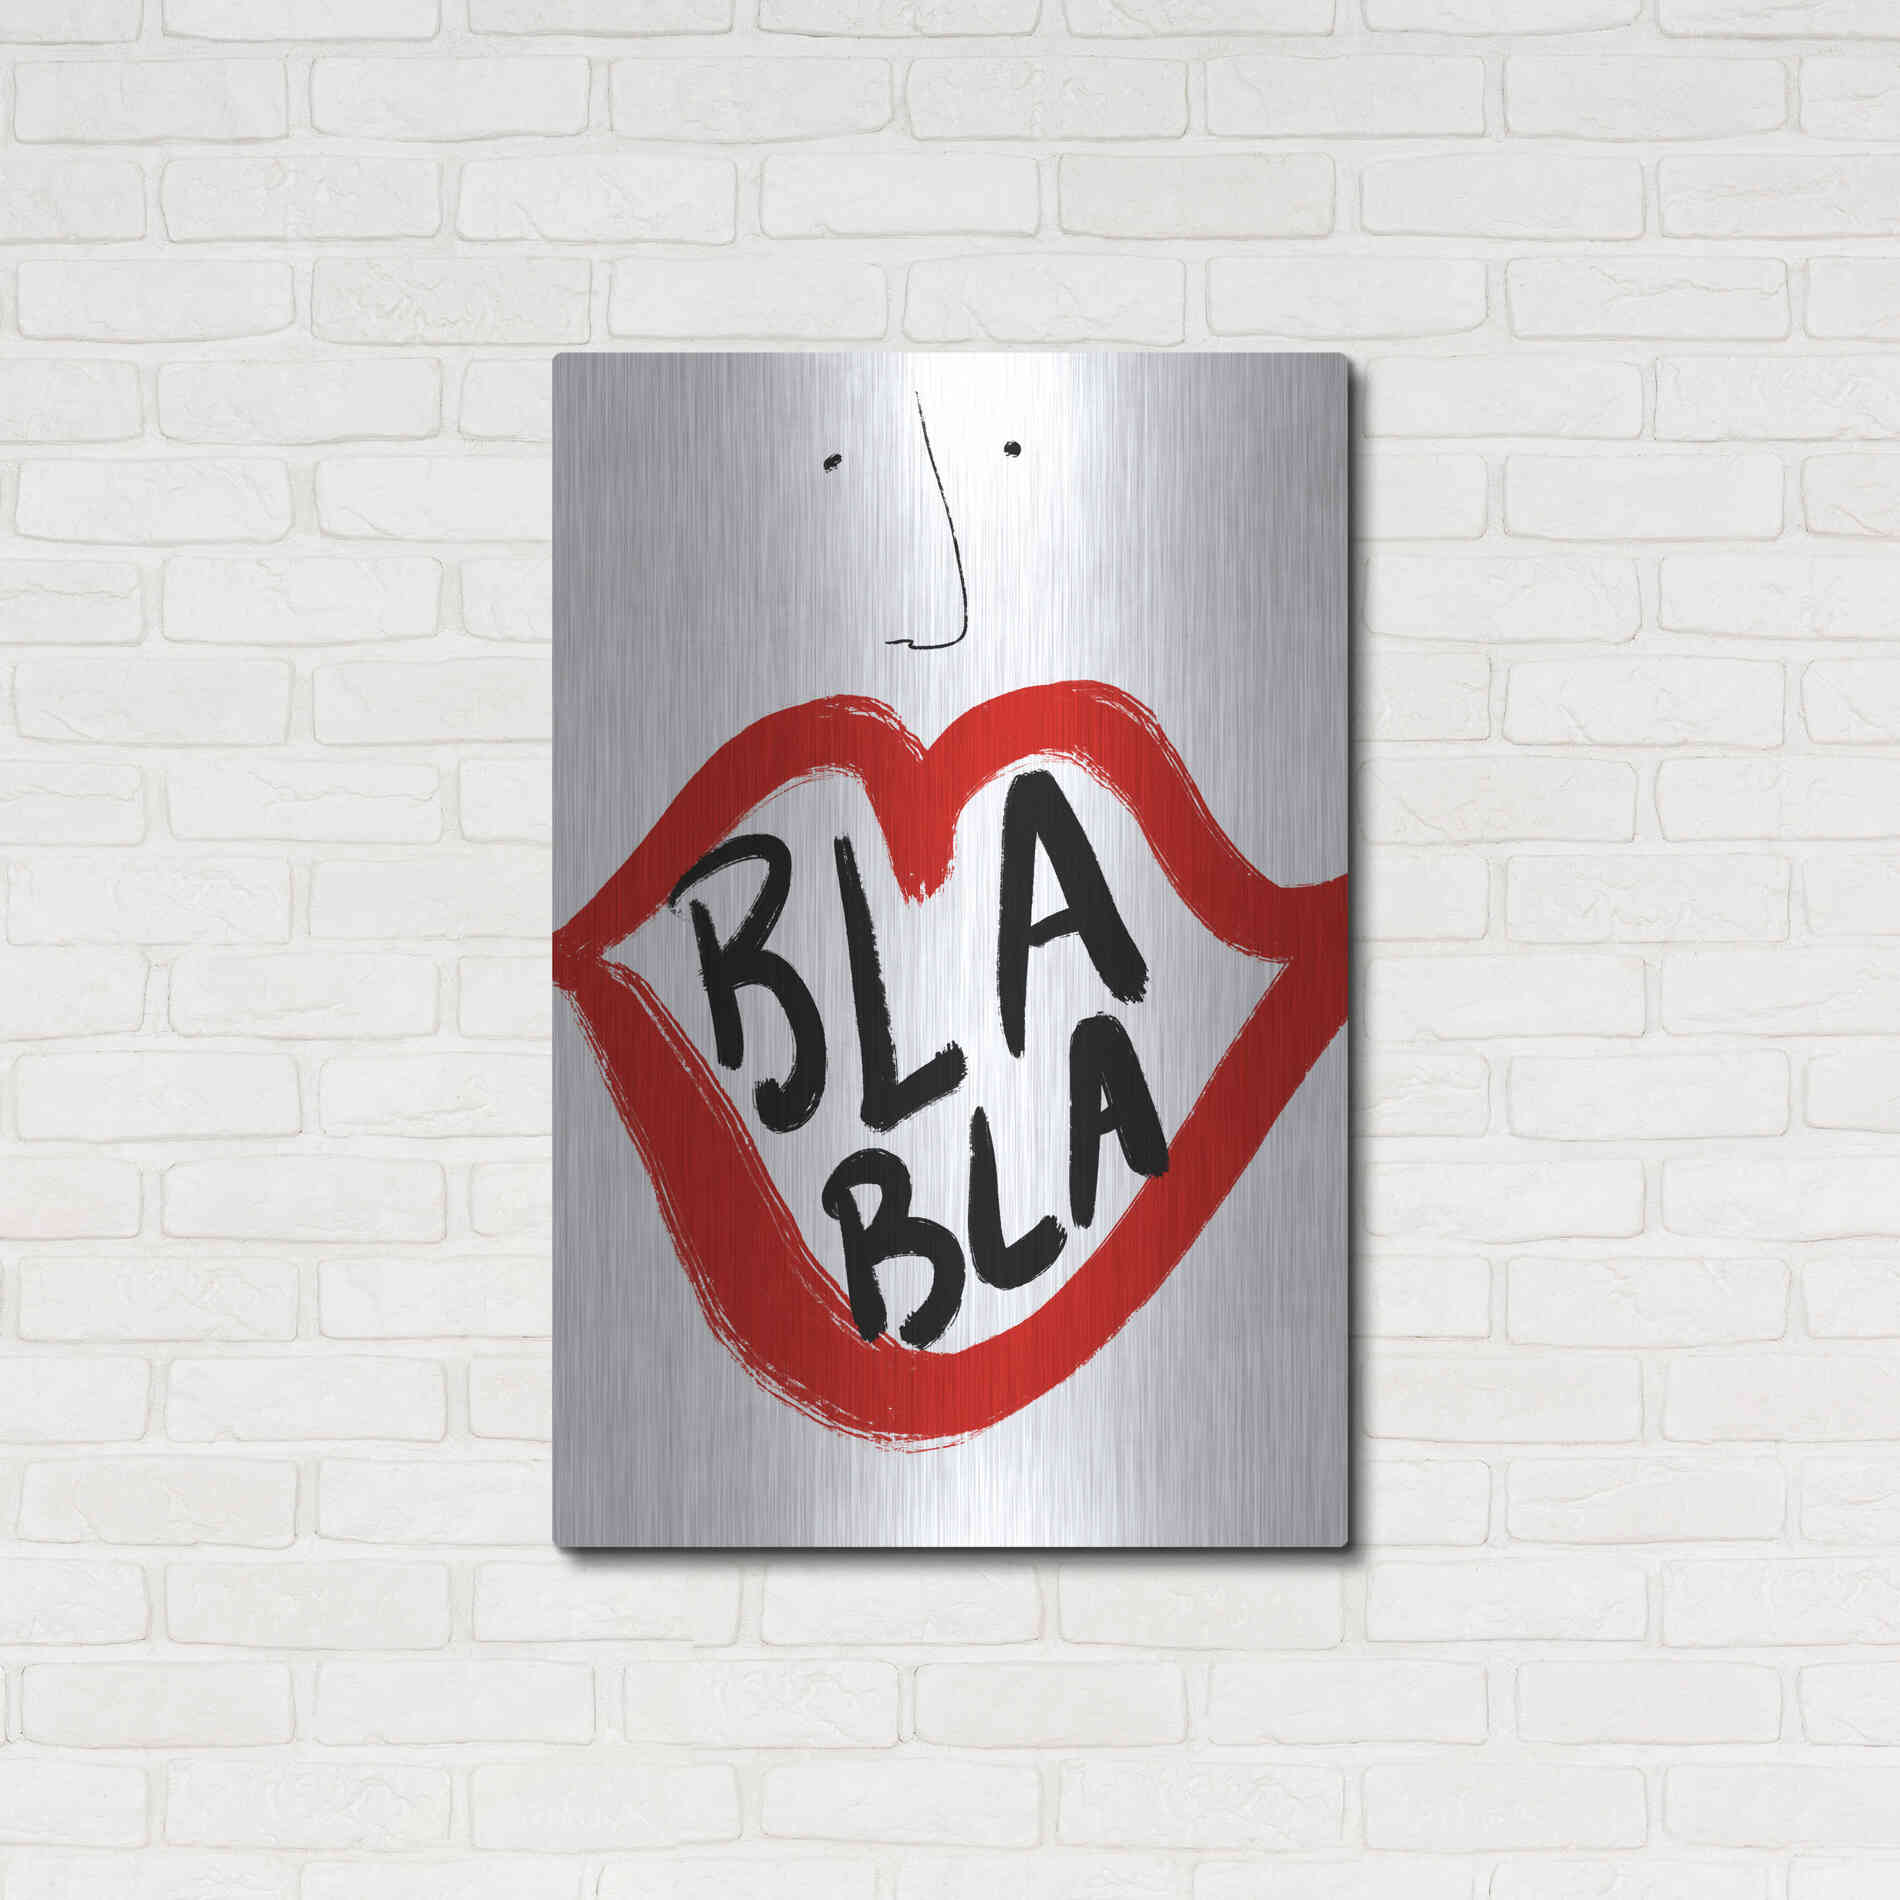 Luxe Metal Art 'Bla Bla' by Cesare Bellassai, Metal Wall Art,24x36